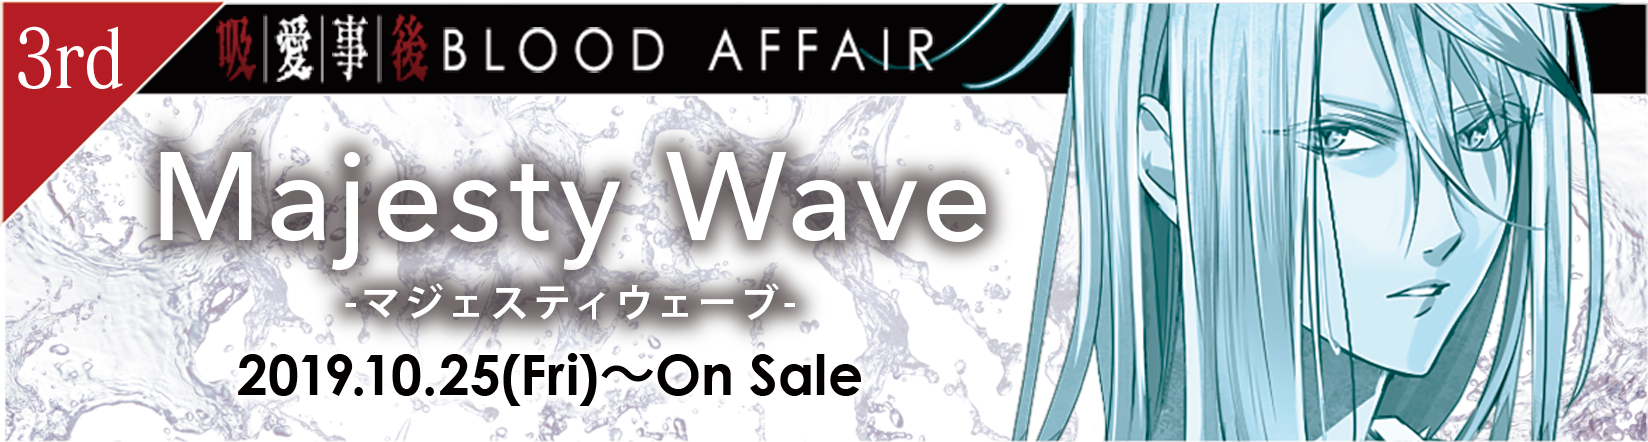 BLOOD AFFAIR -Majesty Wave-